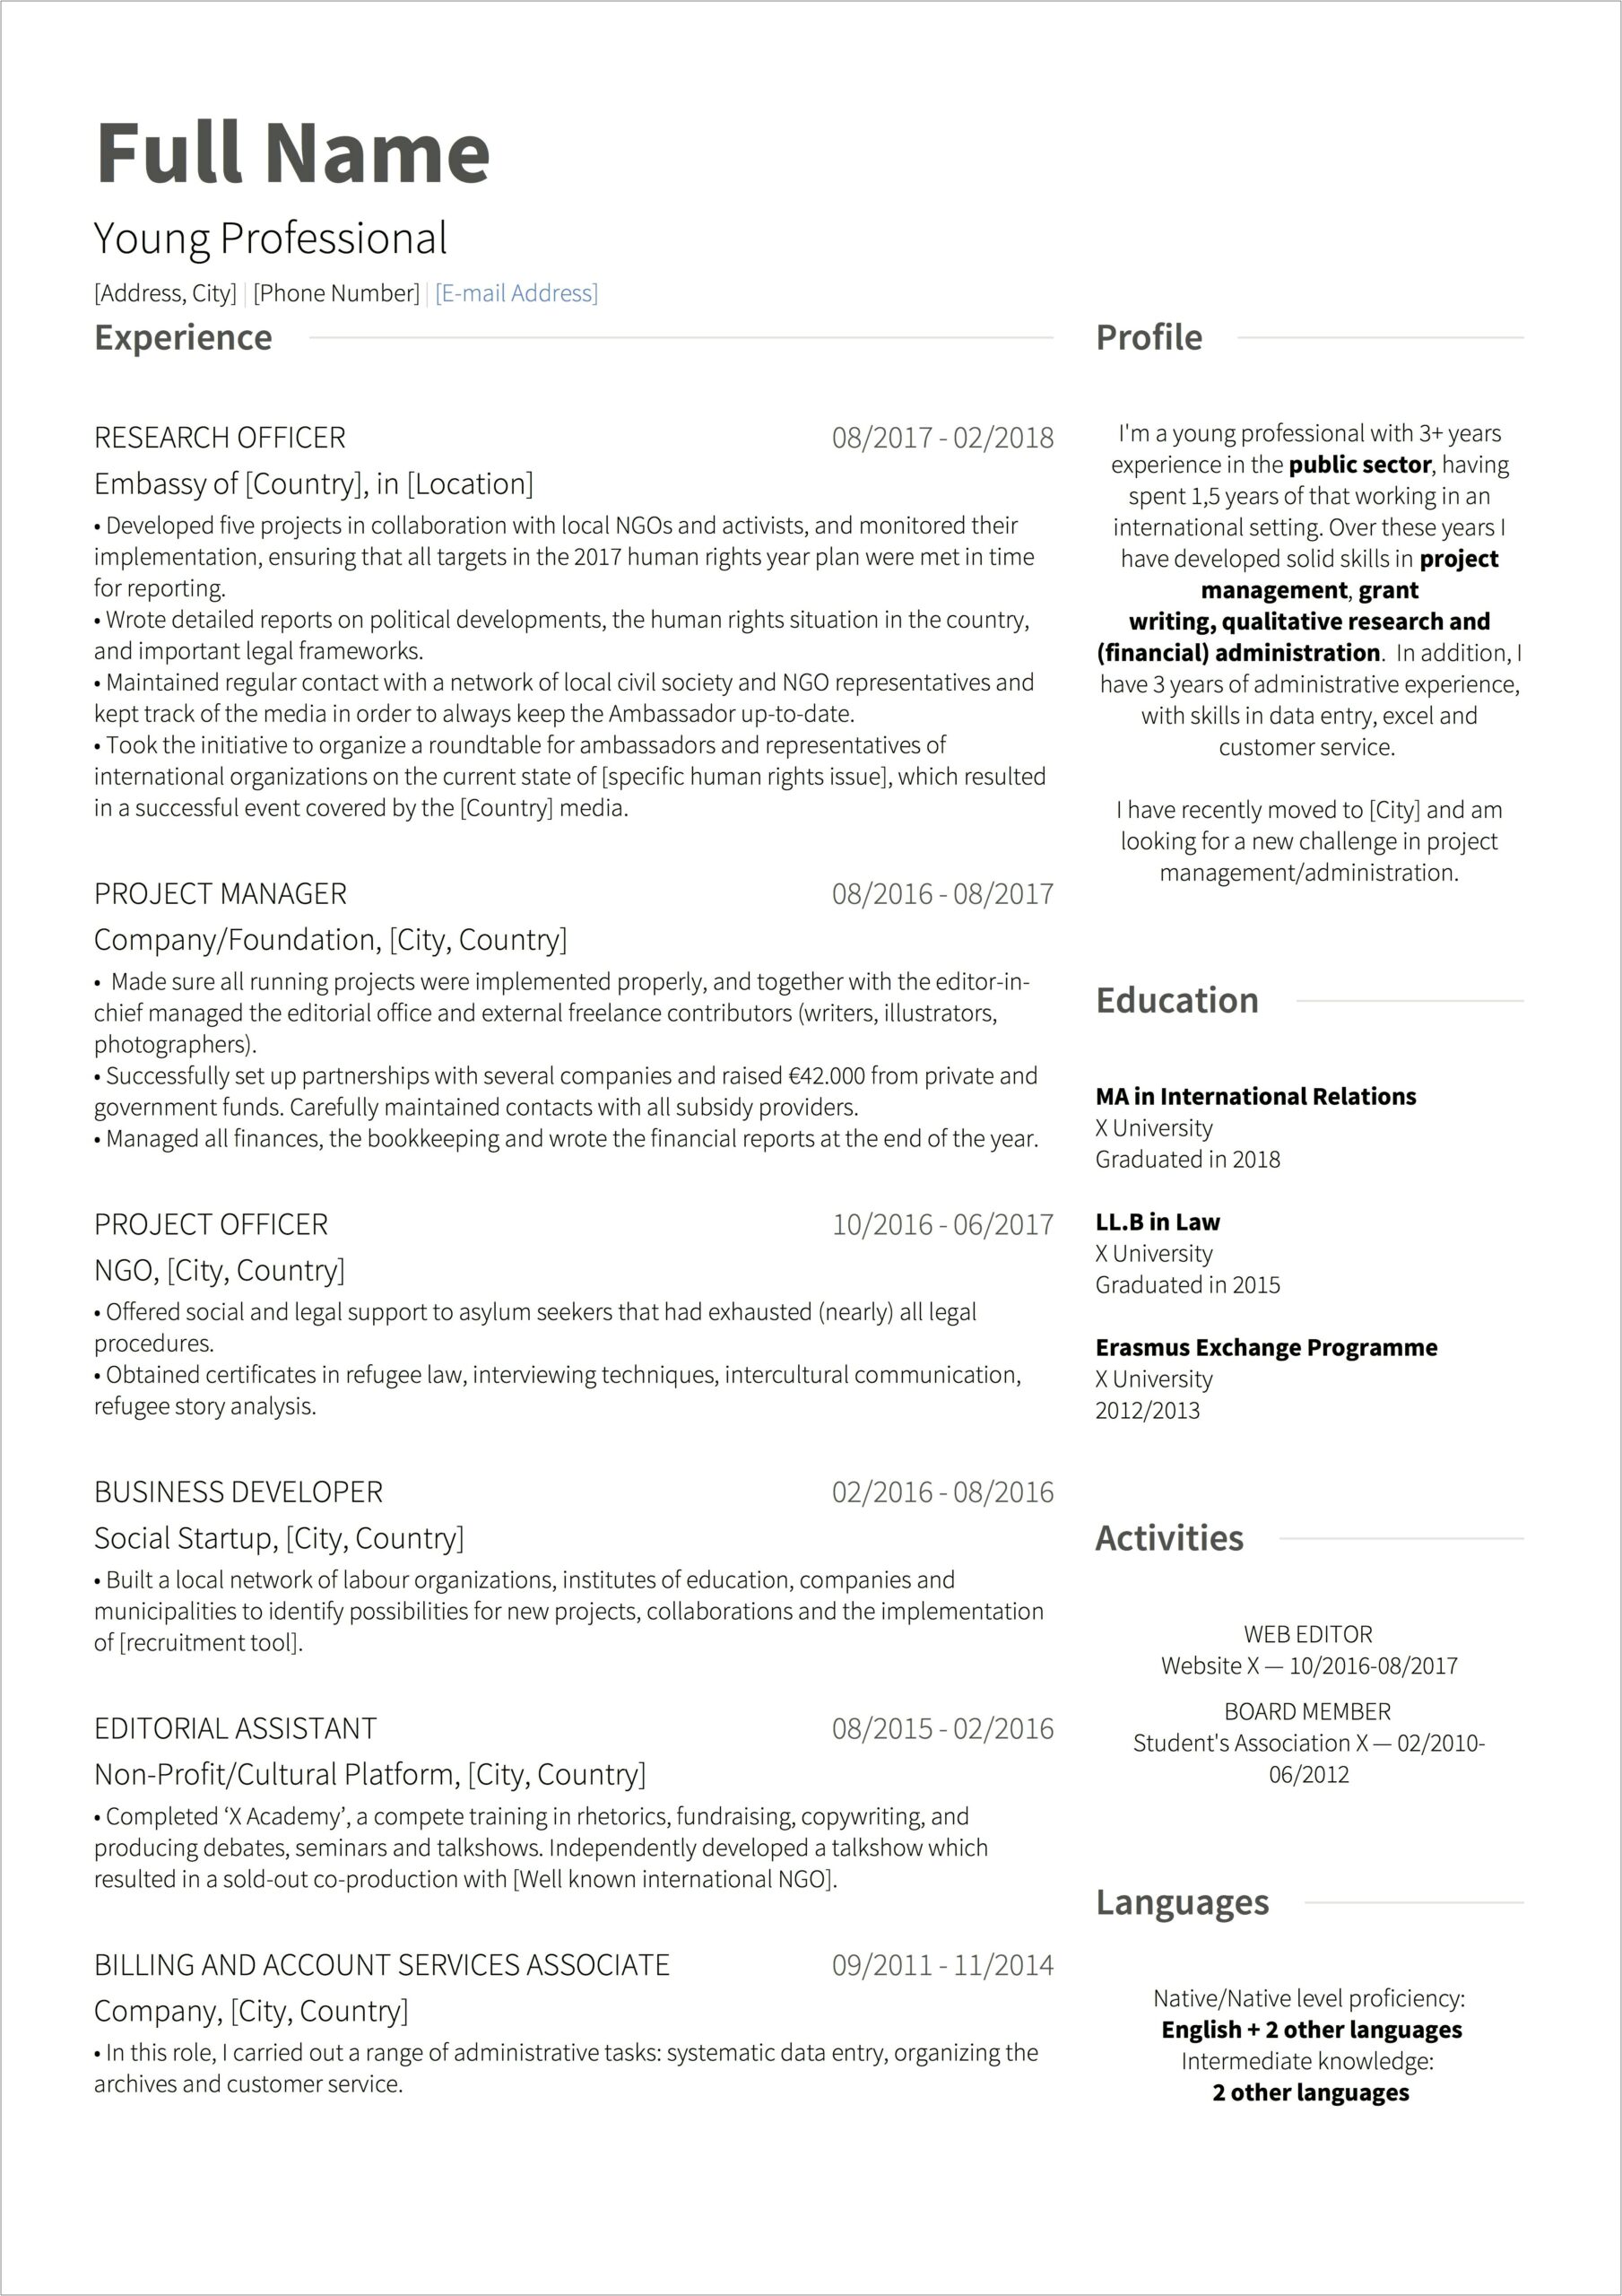 Resume List Job City Reddit